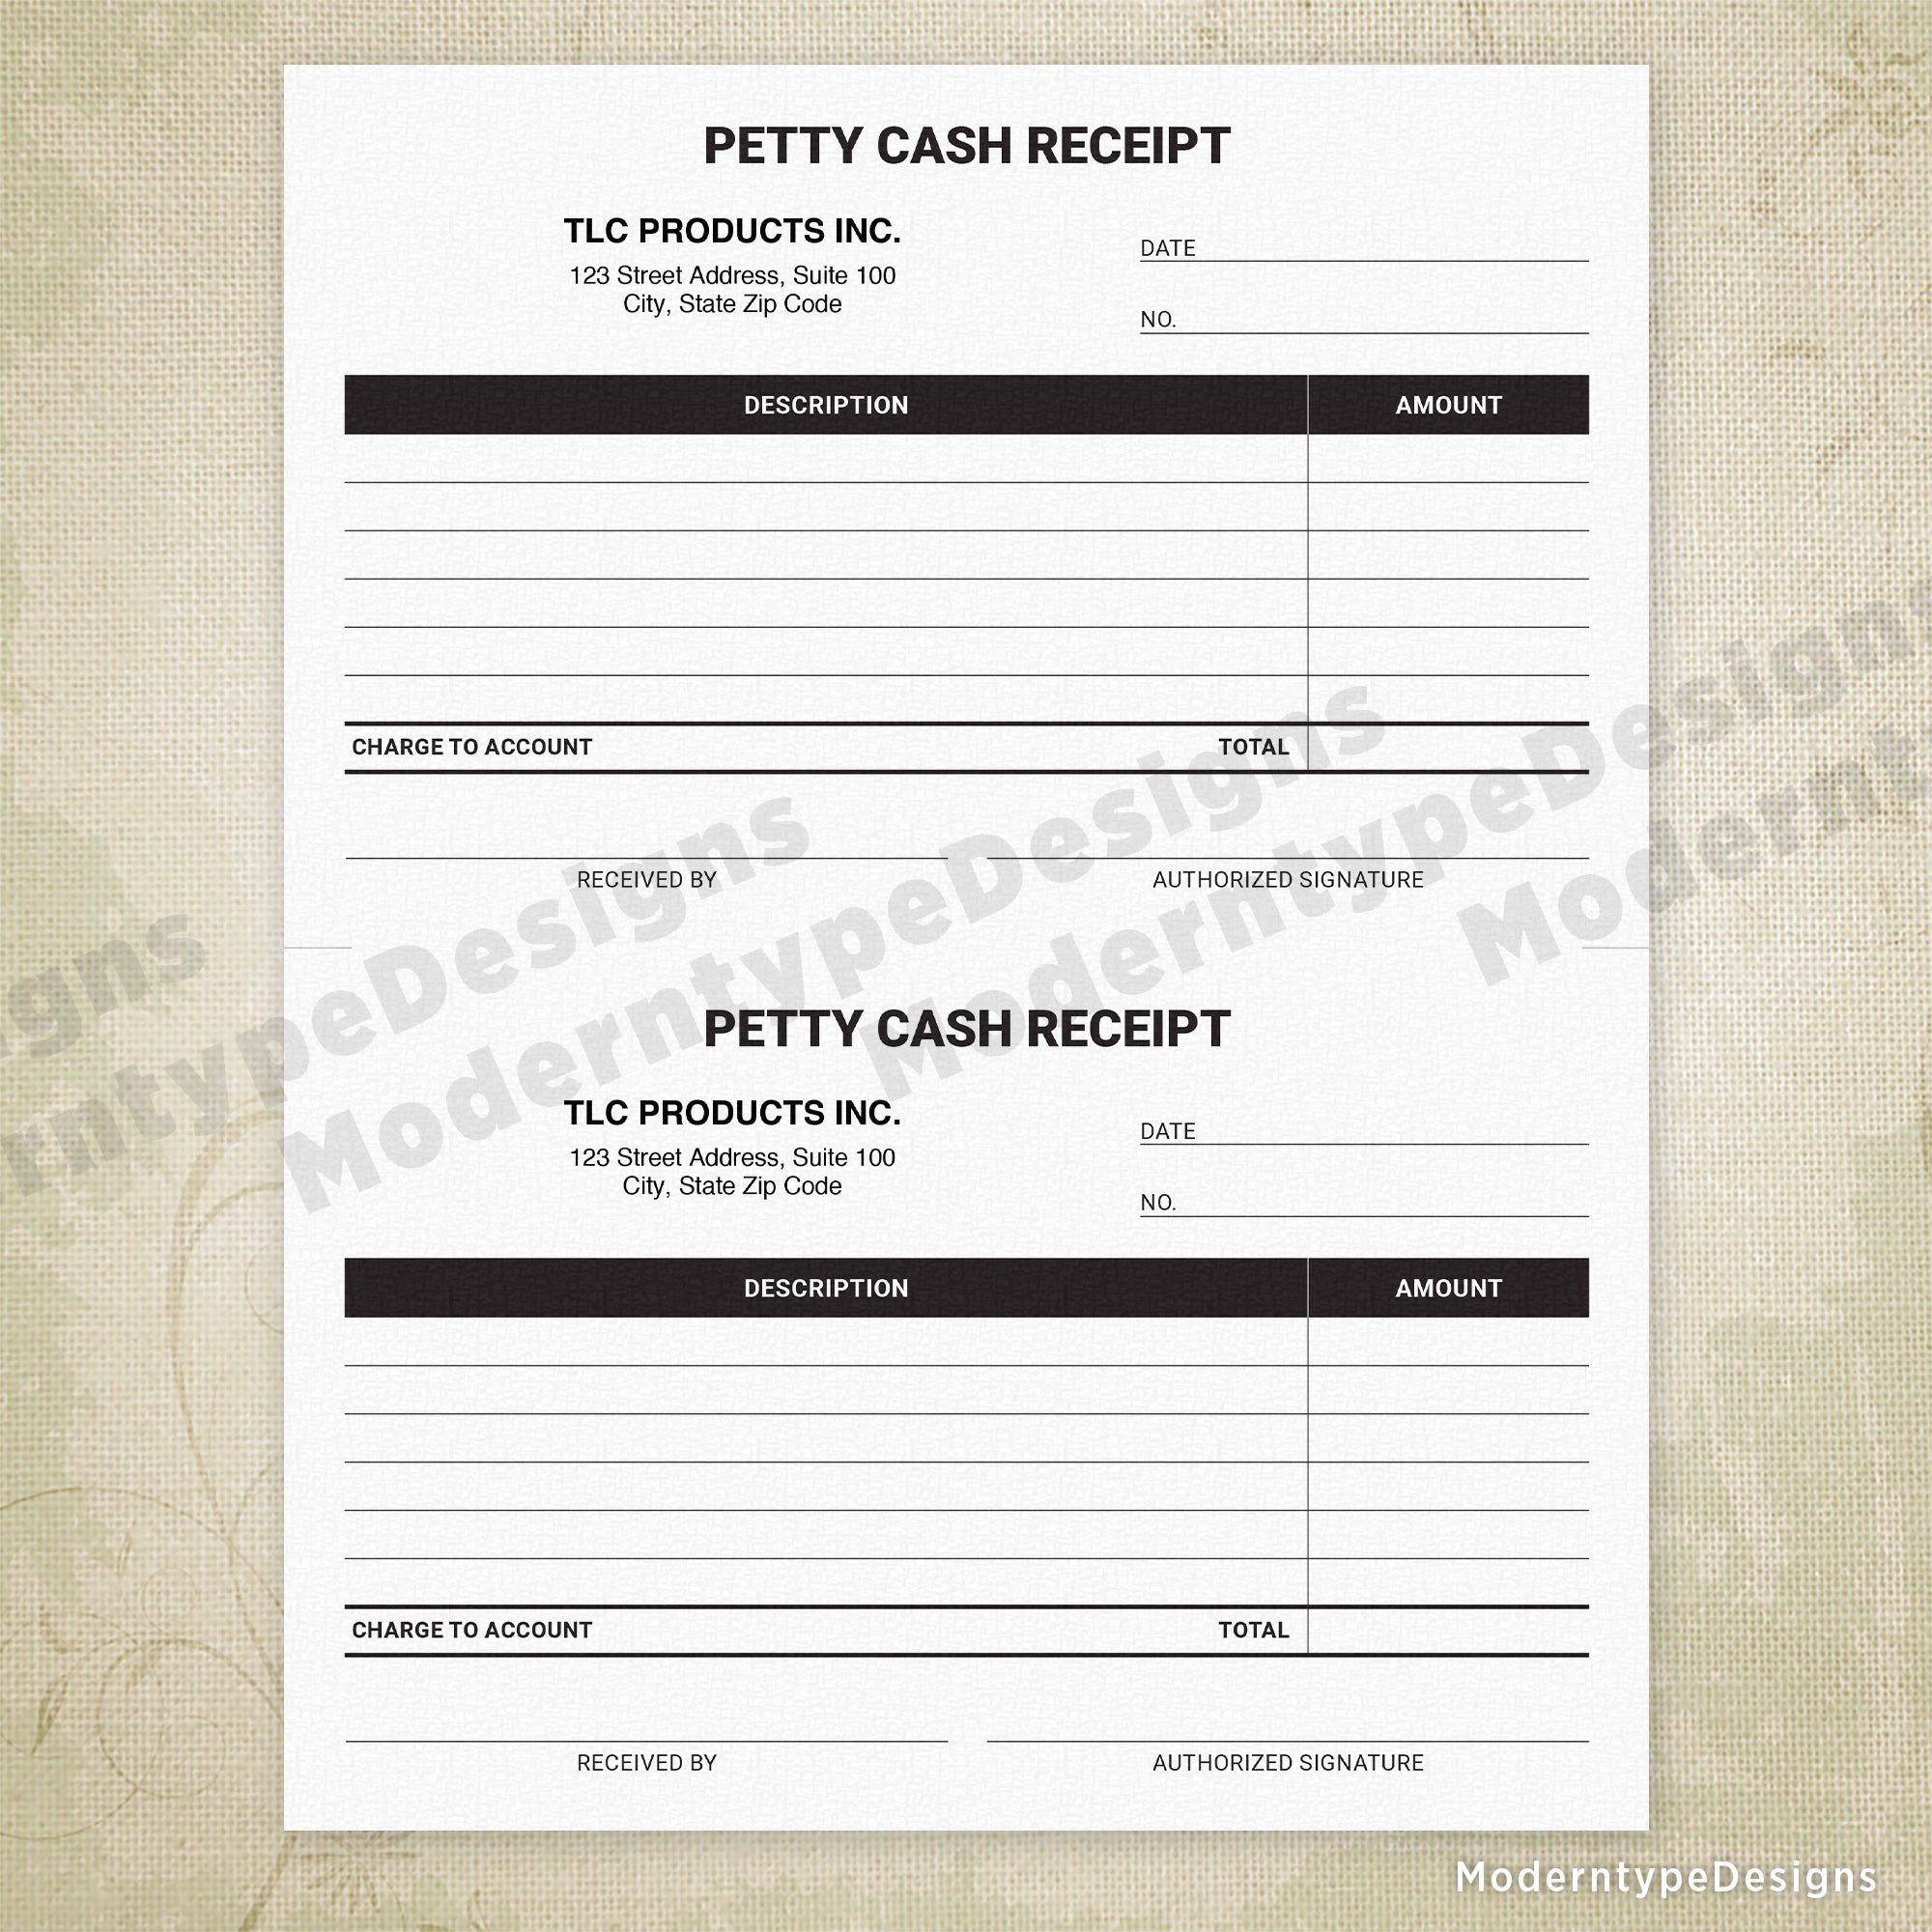 Petty Cash Receipt Printable, 5.5 x 8.5, Half Sheet, Personalized